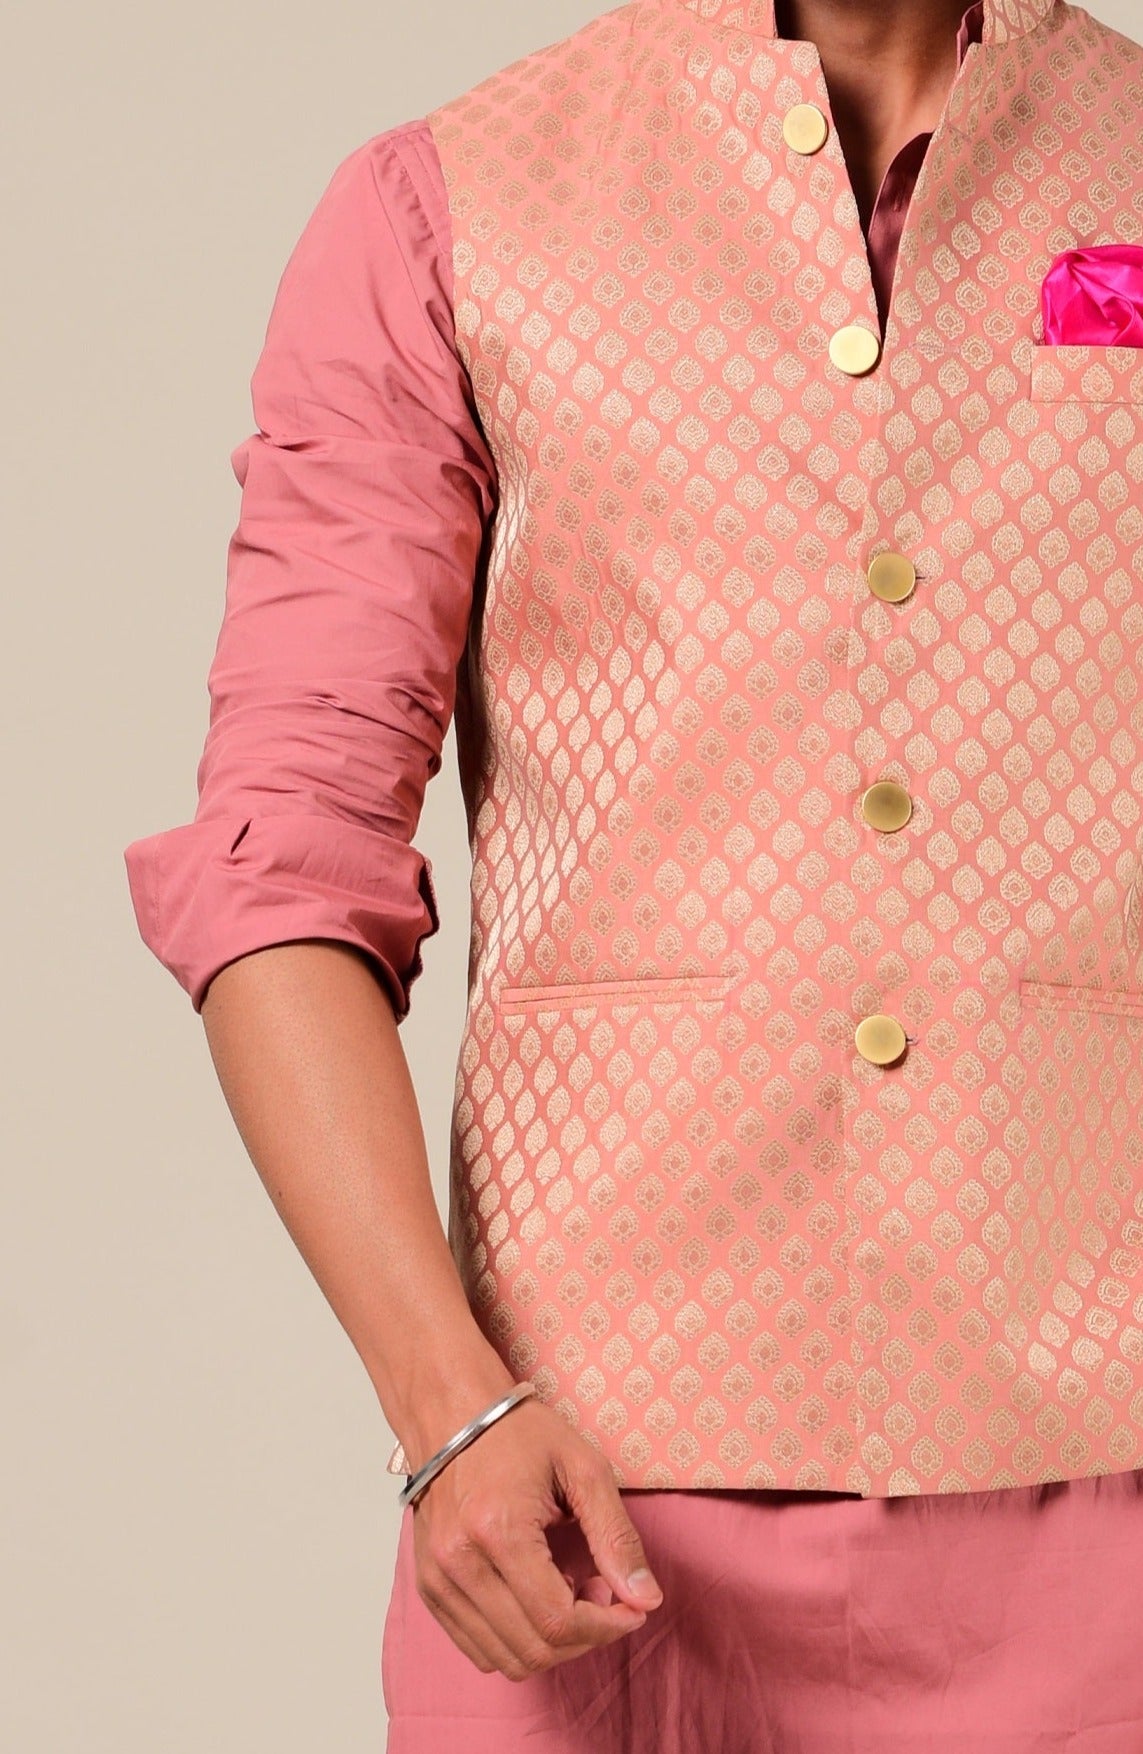 Beige Color Rayon Fabric Wedding Style Royal Jodhpuri Jacket